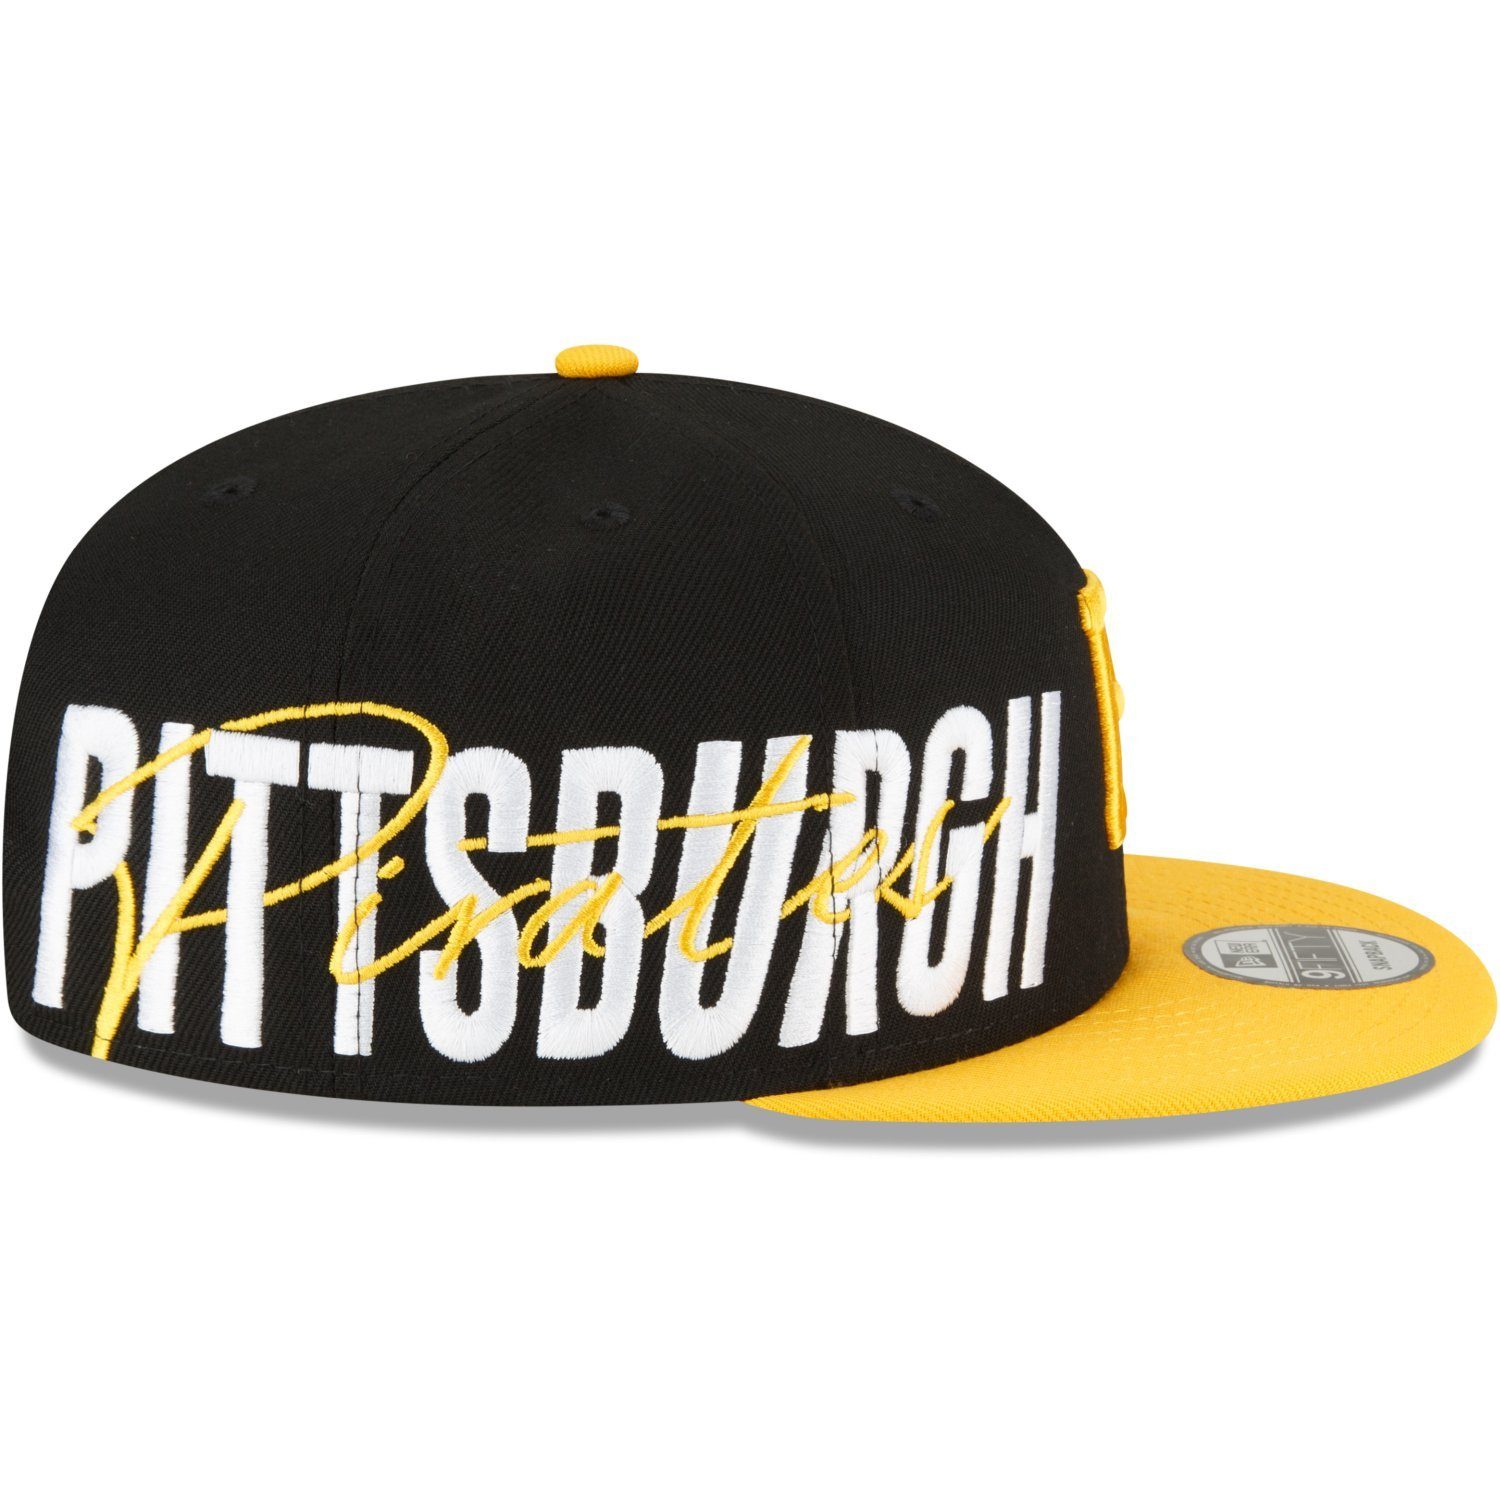 9Fifty Era Pirates Snapback SIDEFONT Cap New Pittsburgh